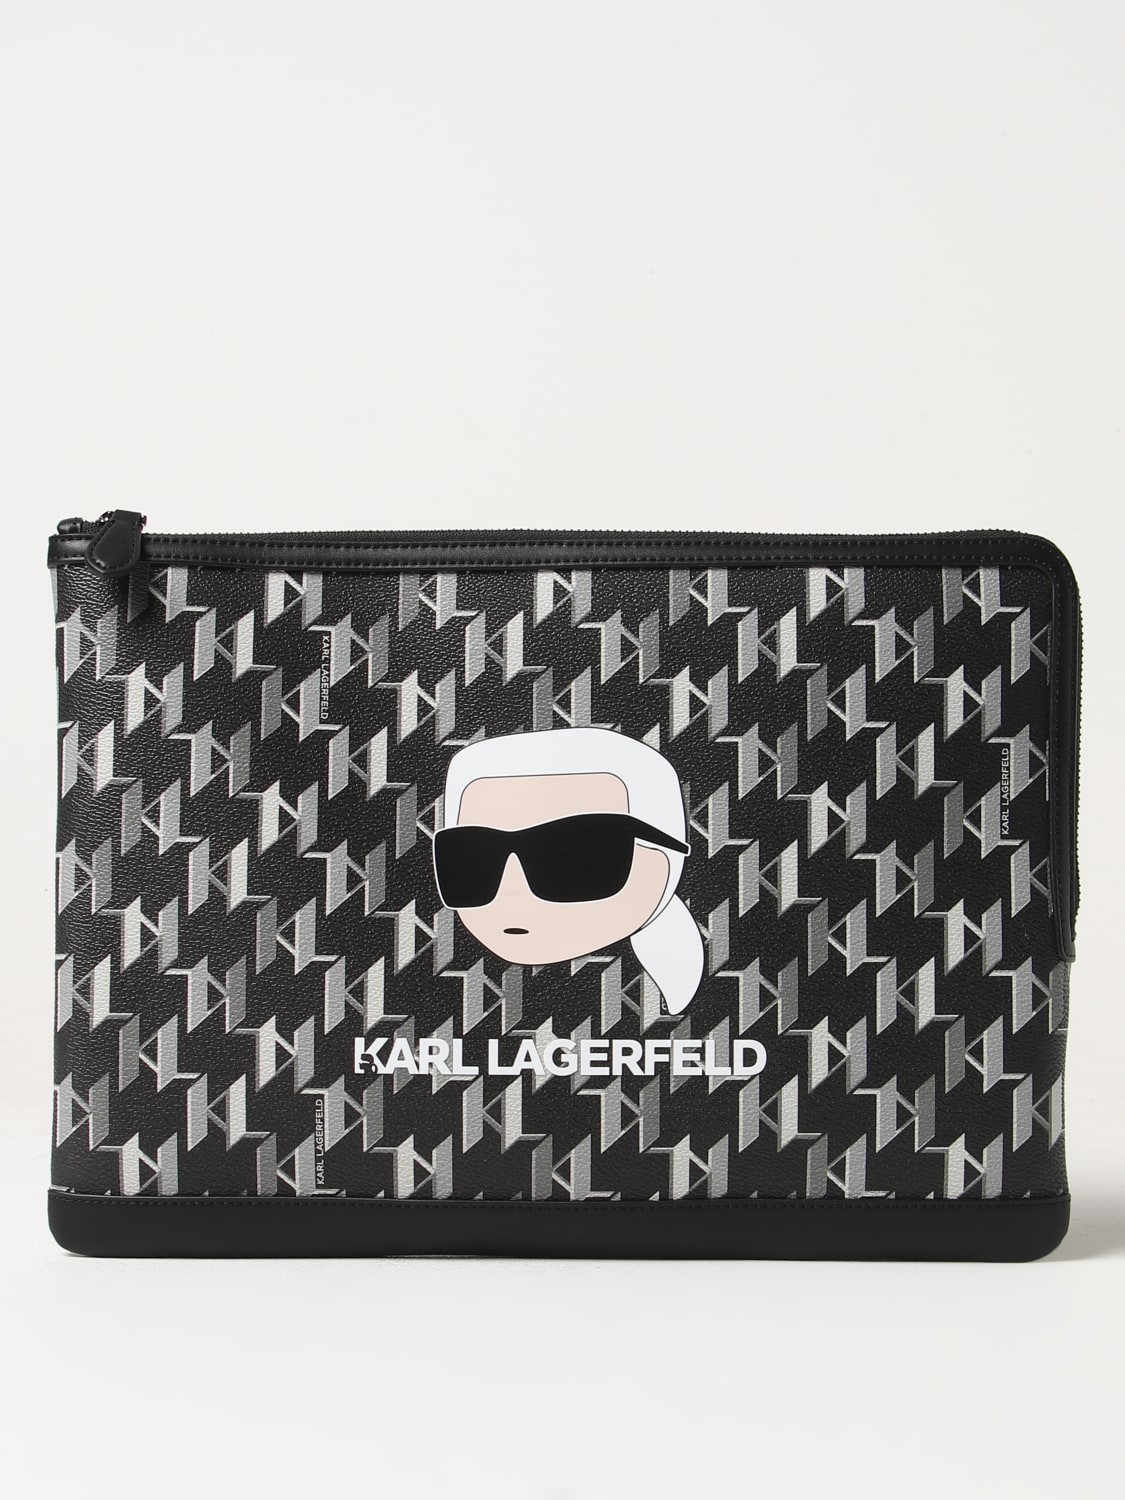 Karl Lagerfeld Woman's Clutch